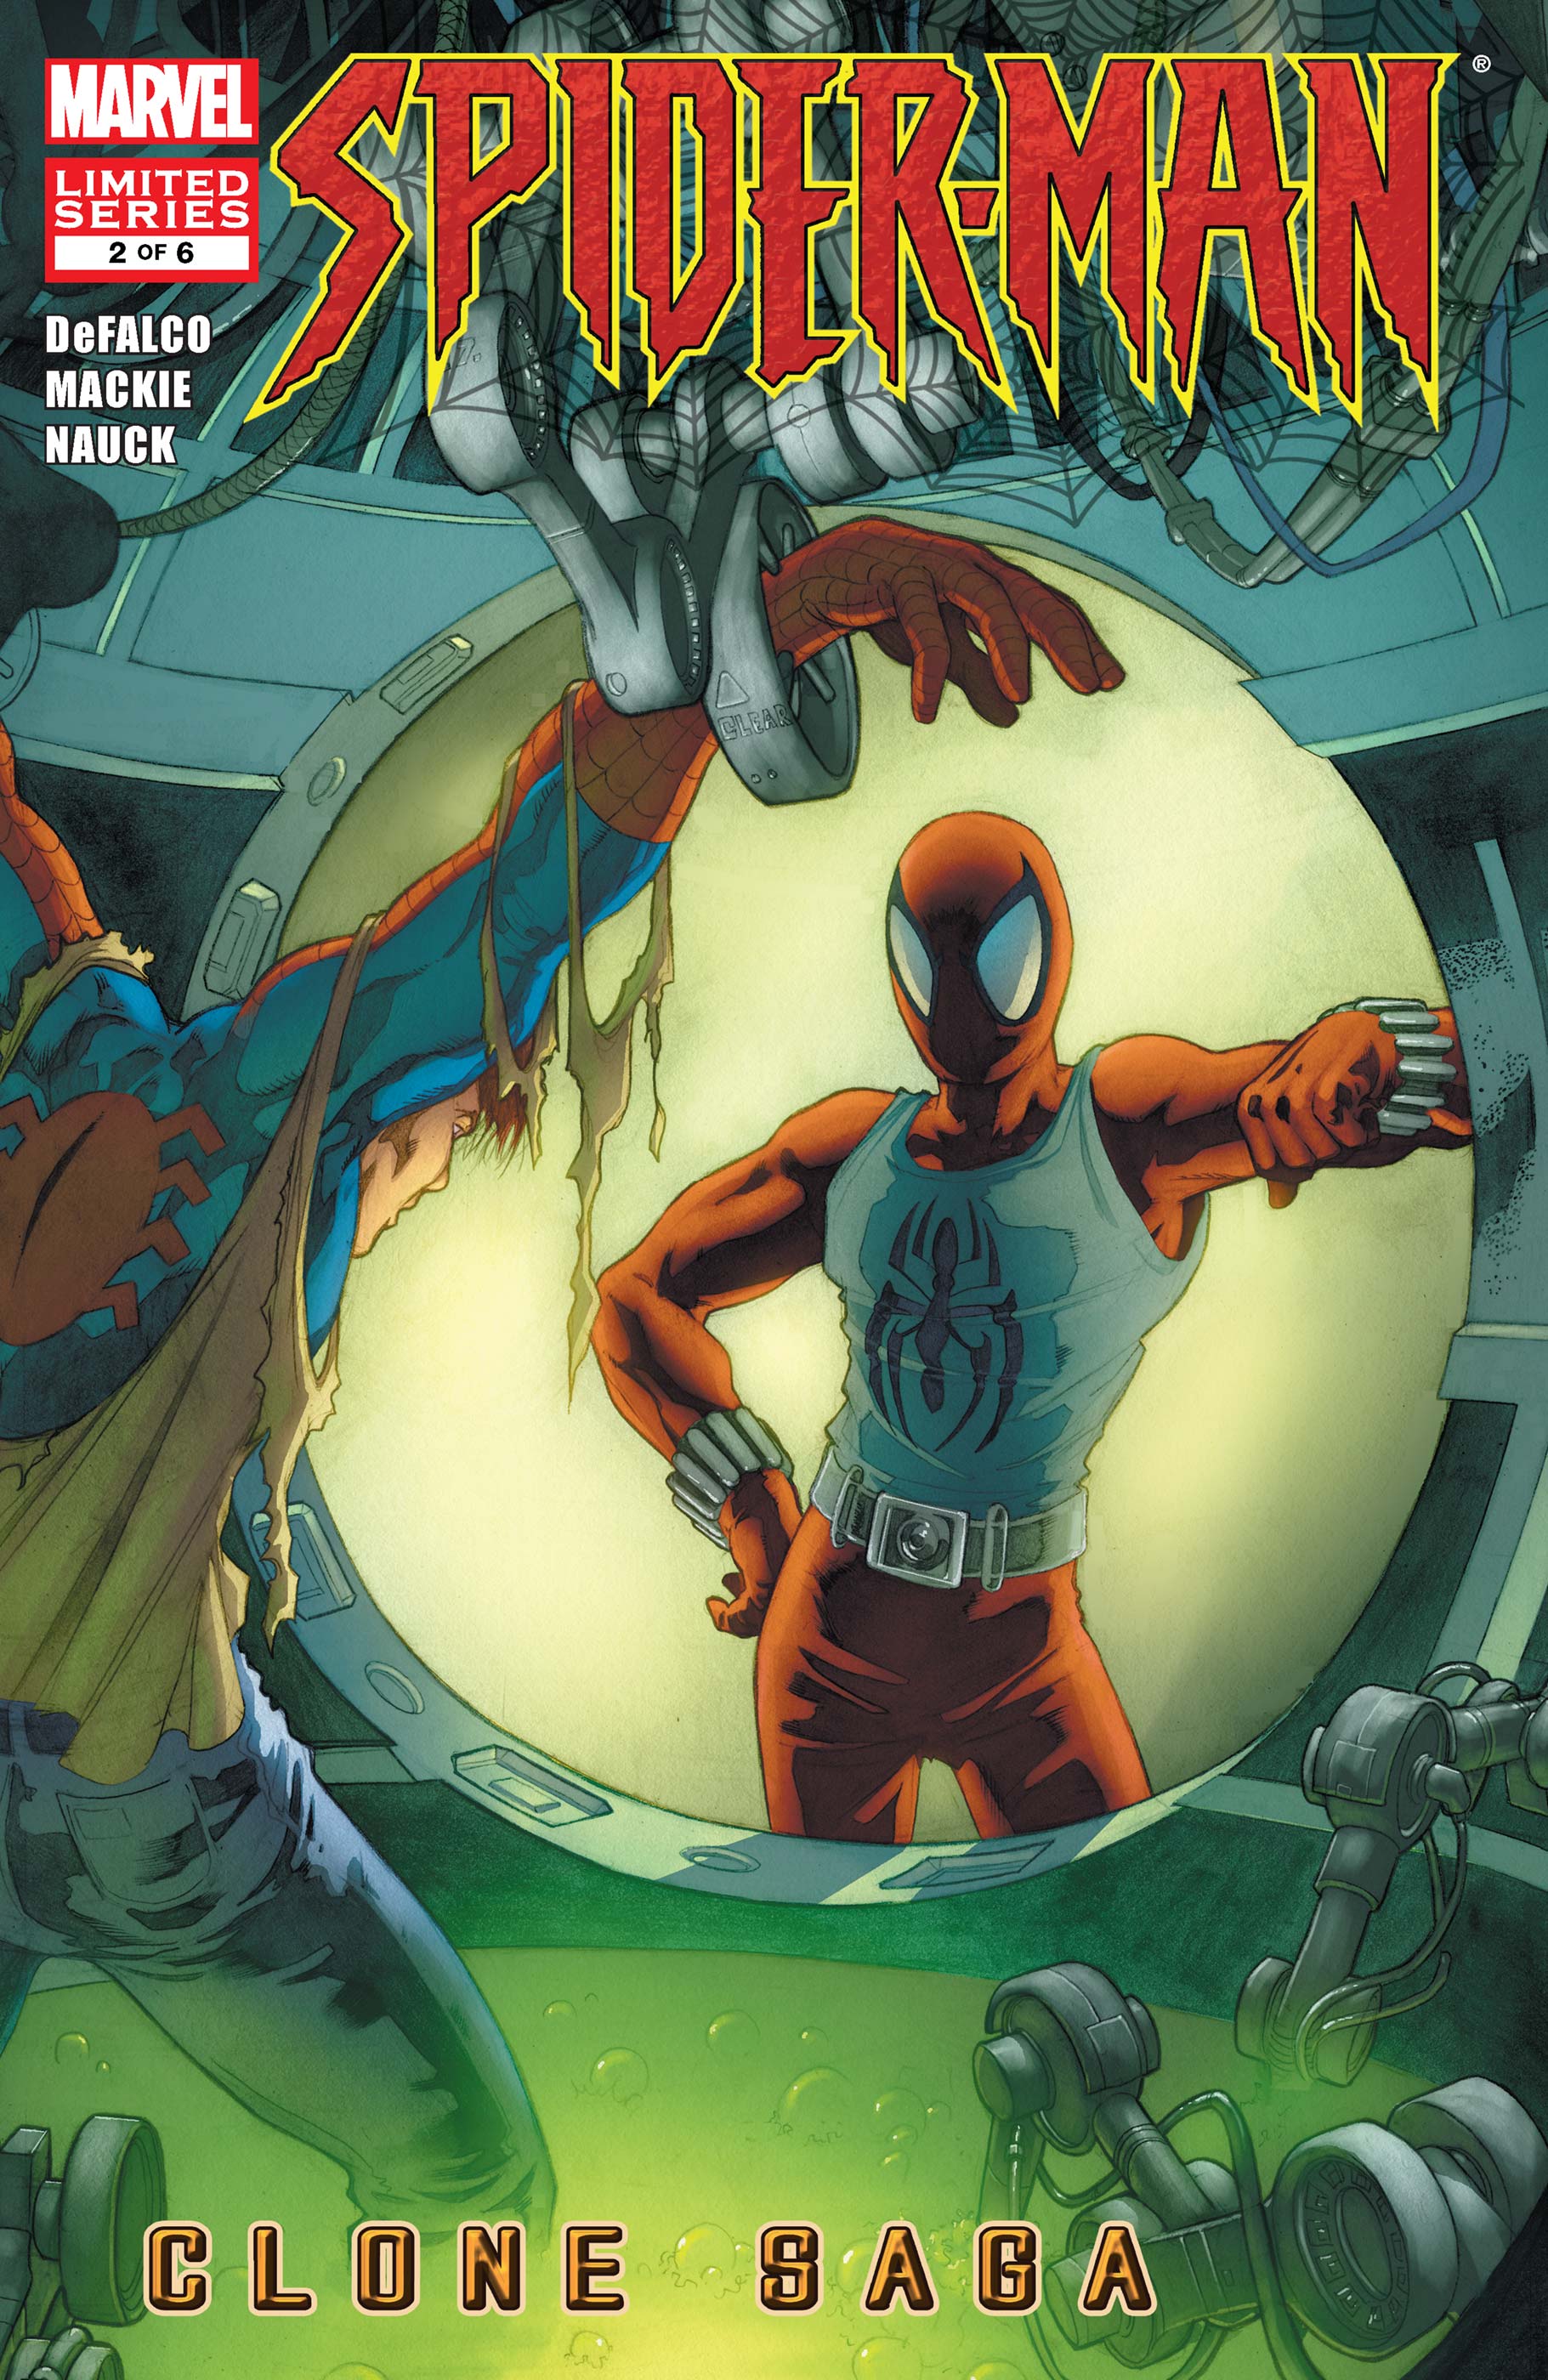 Spider-Man: The Clone Saga (2009) #2